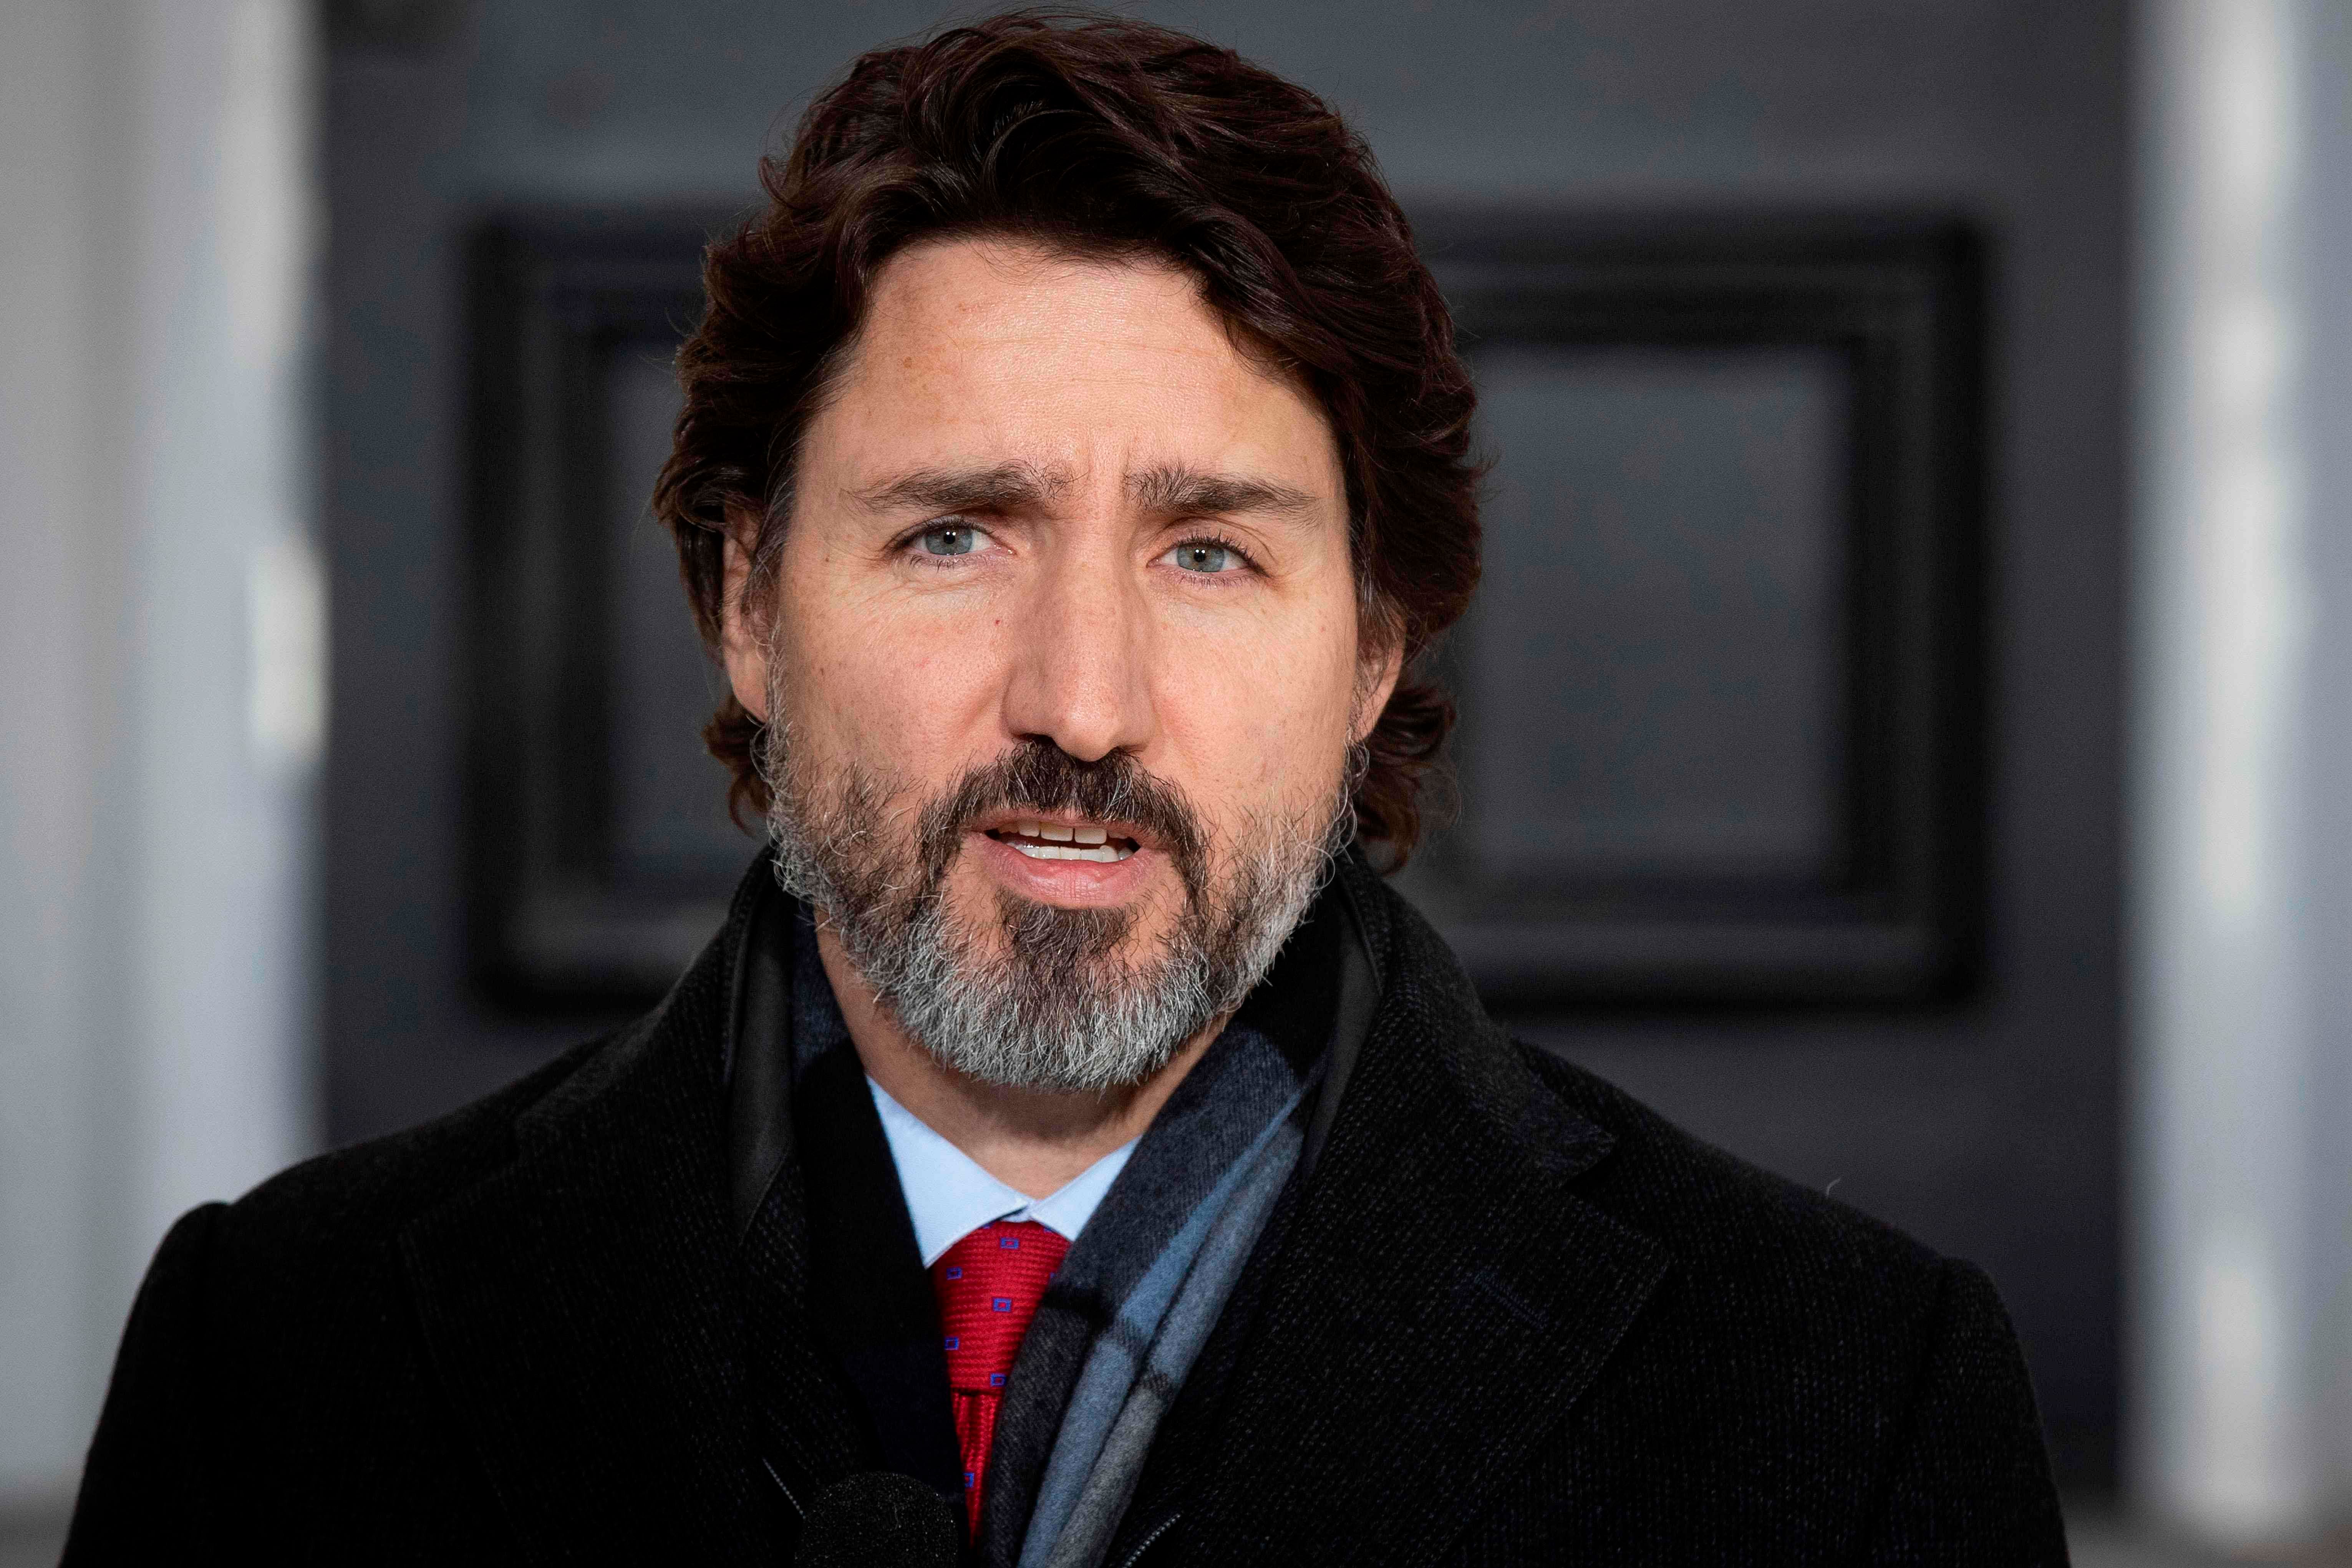 Canadian PM Justin Trudeau. Credit: AFP Photo